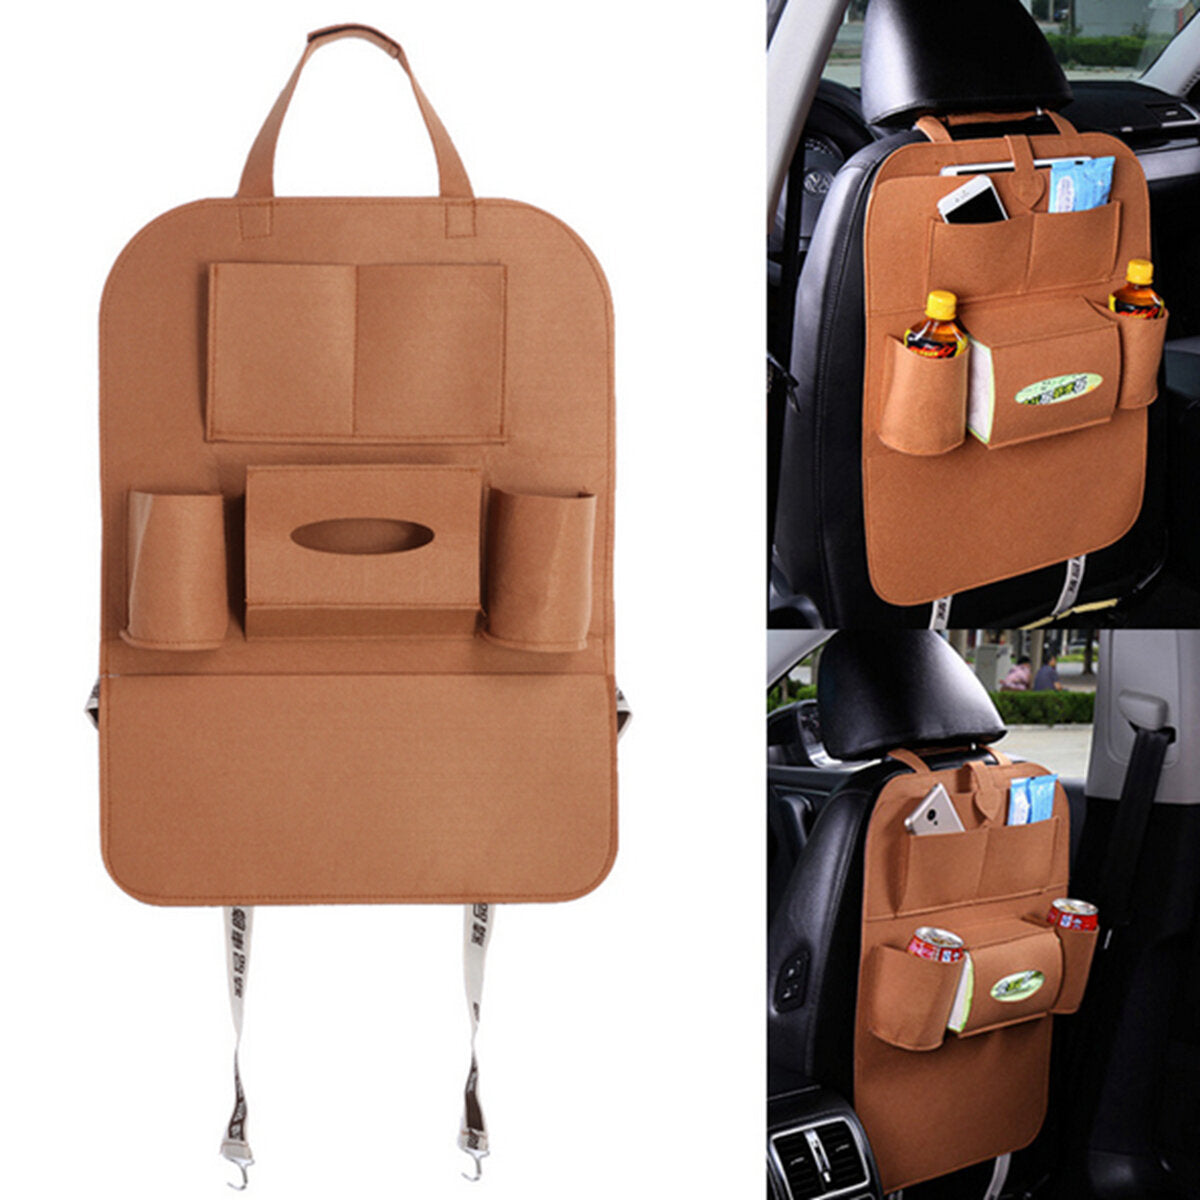 Auto Car Seat Back Hanging Multi-Pocket Storage Bag Organizer Holder Car Storage Box